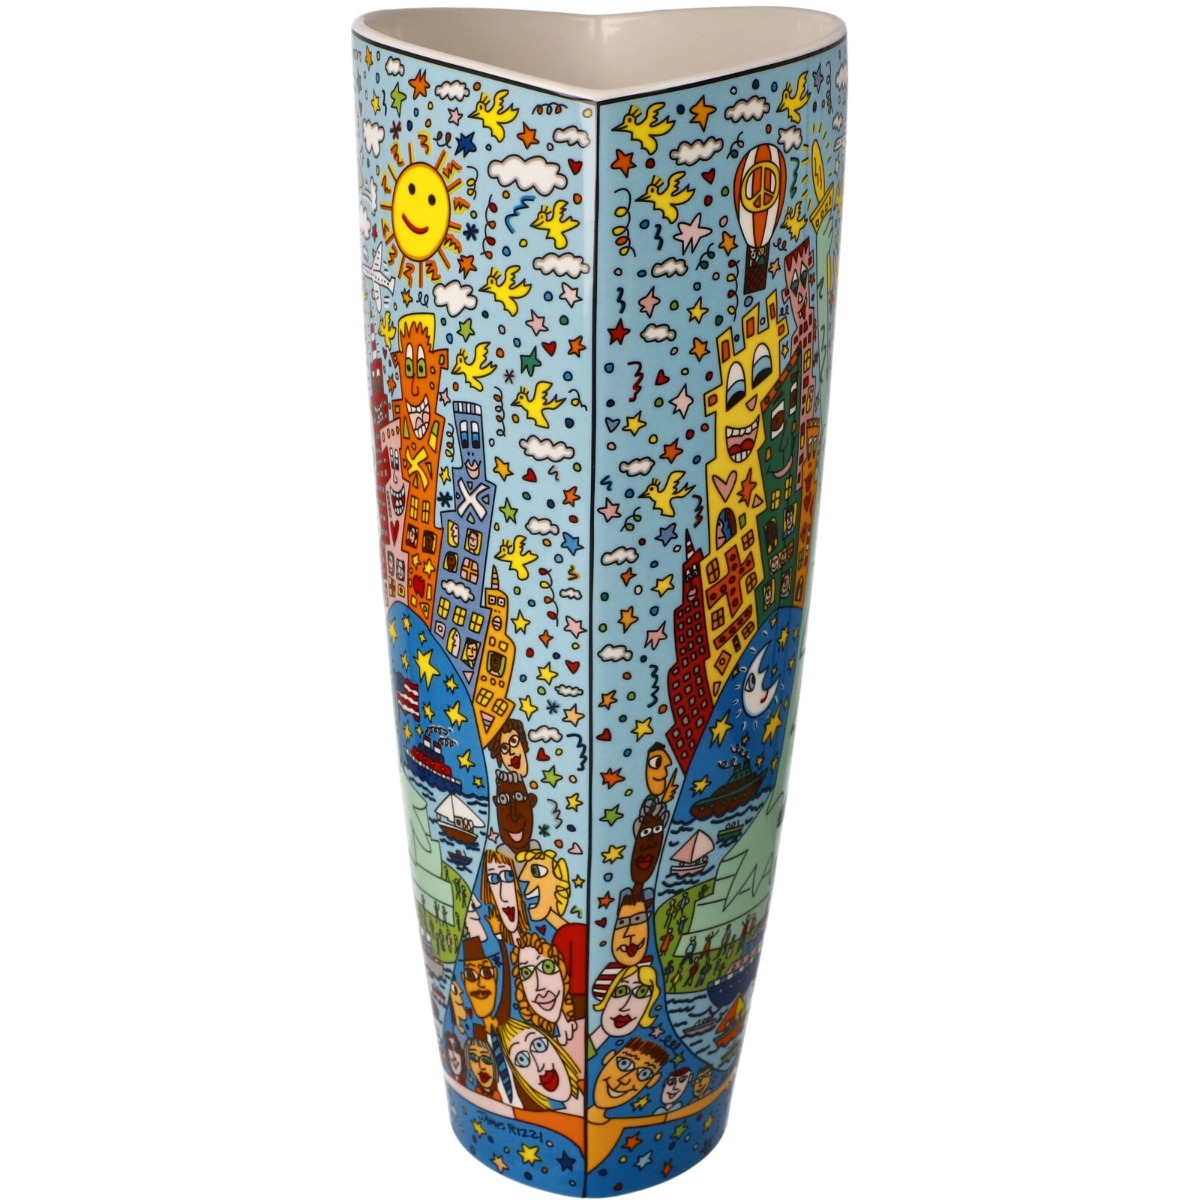 Goebel Vase 